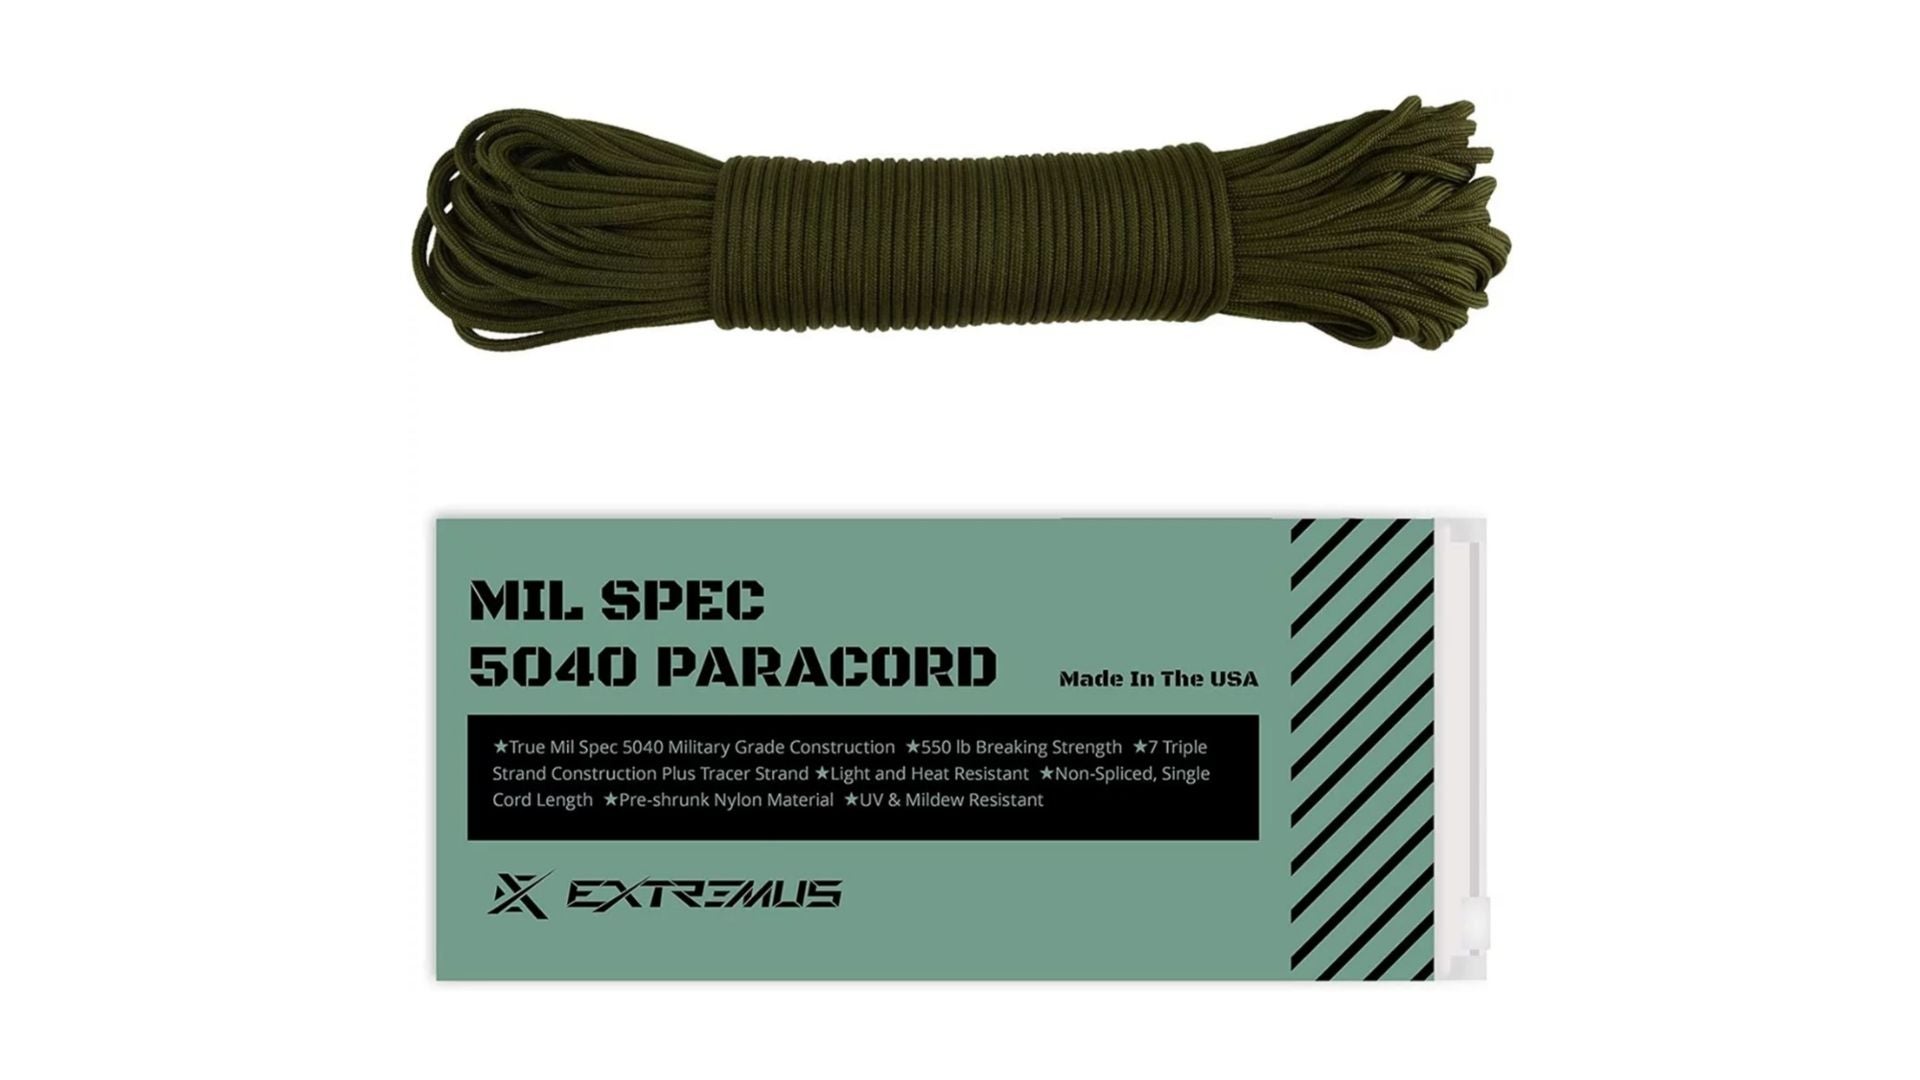 550 PARACORD 7 INNER STRANDS MIL SPEC TYPE III BUSHCRAFT SURVIVAL EDC BRACELETS 